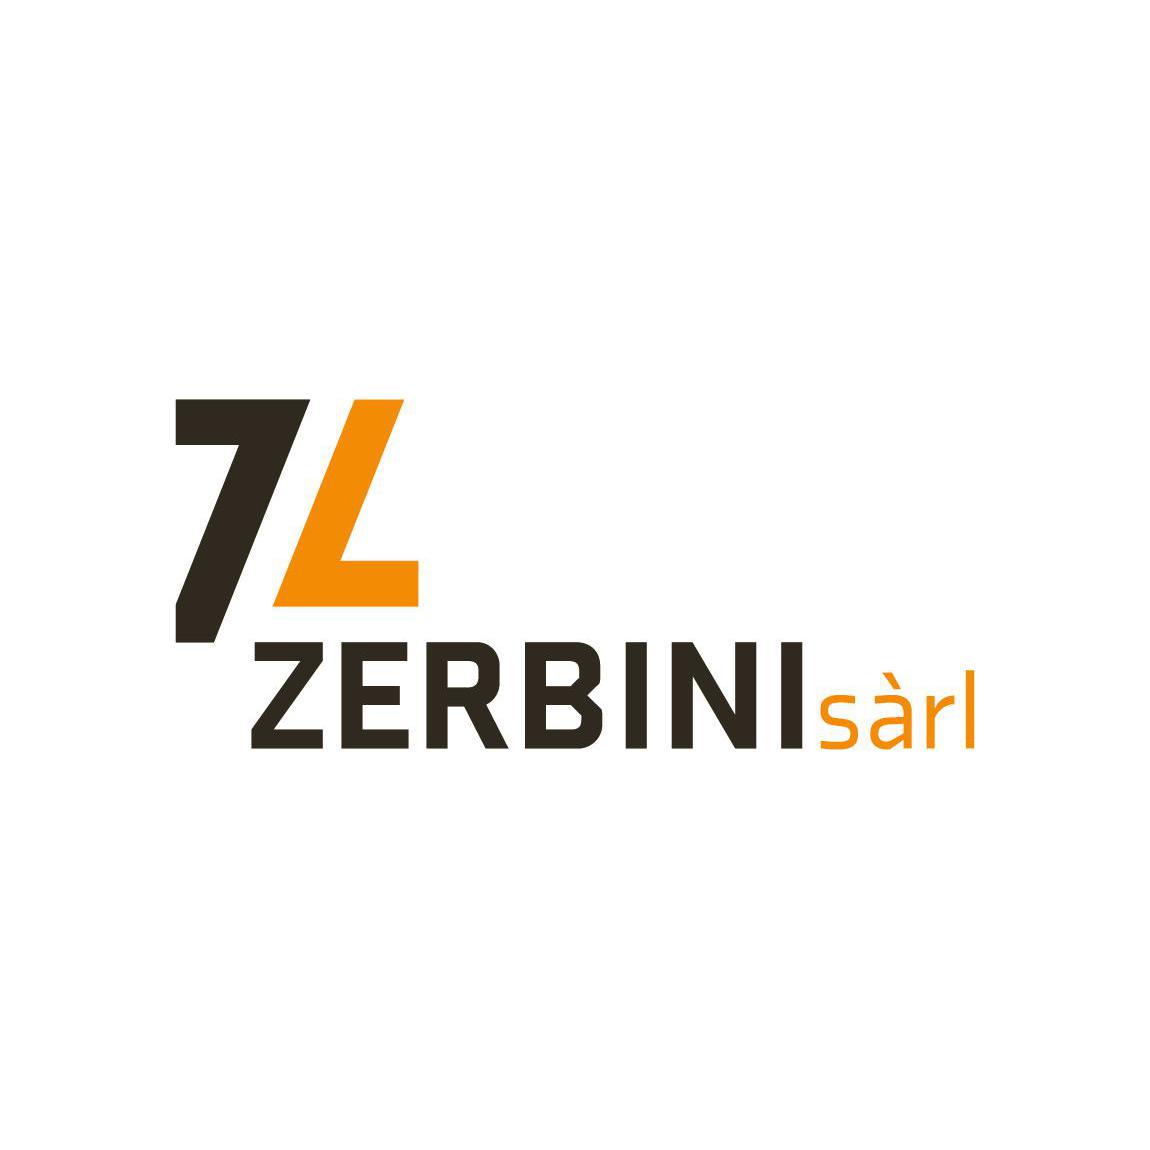 Zerbini Sàrl Logo